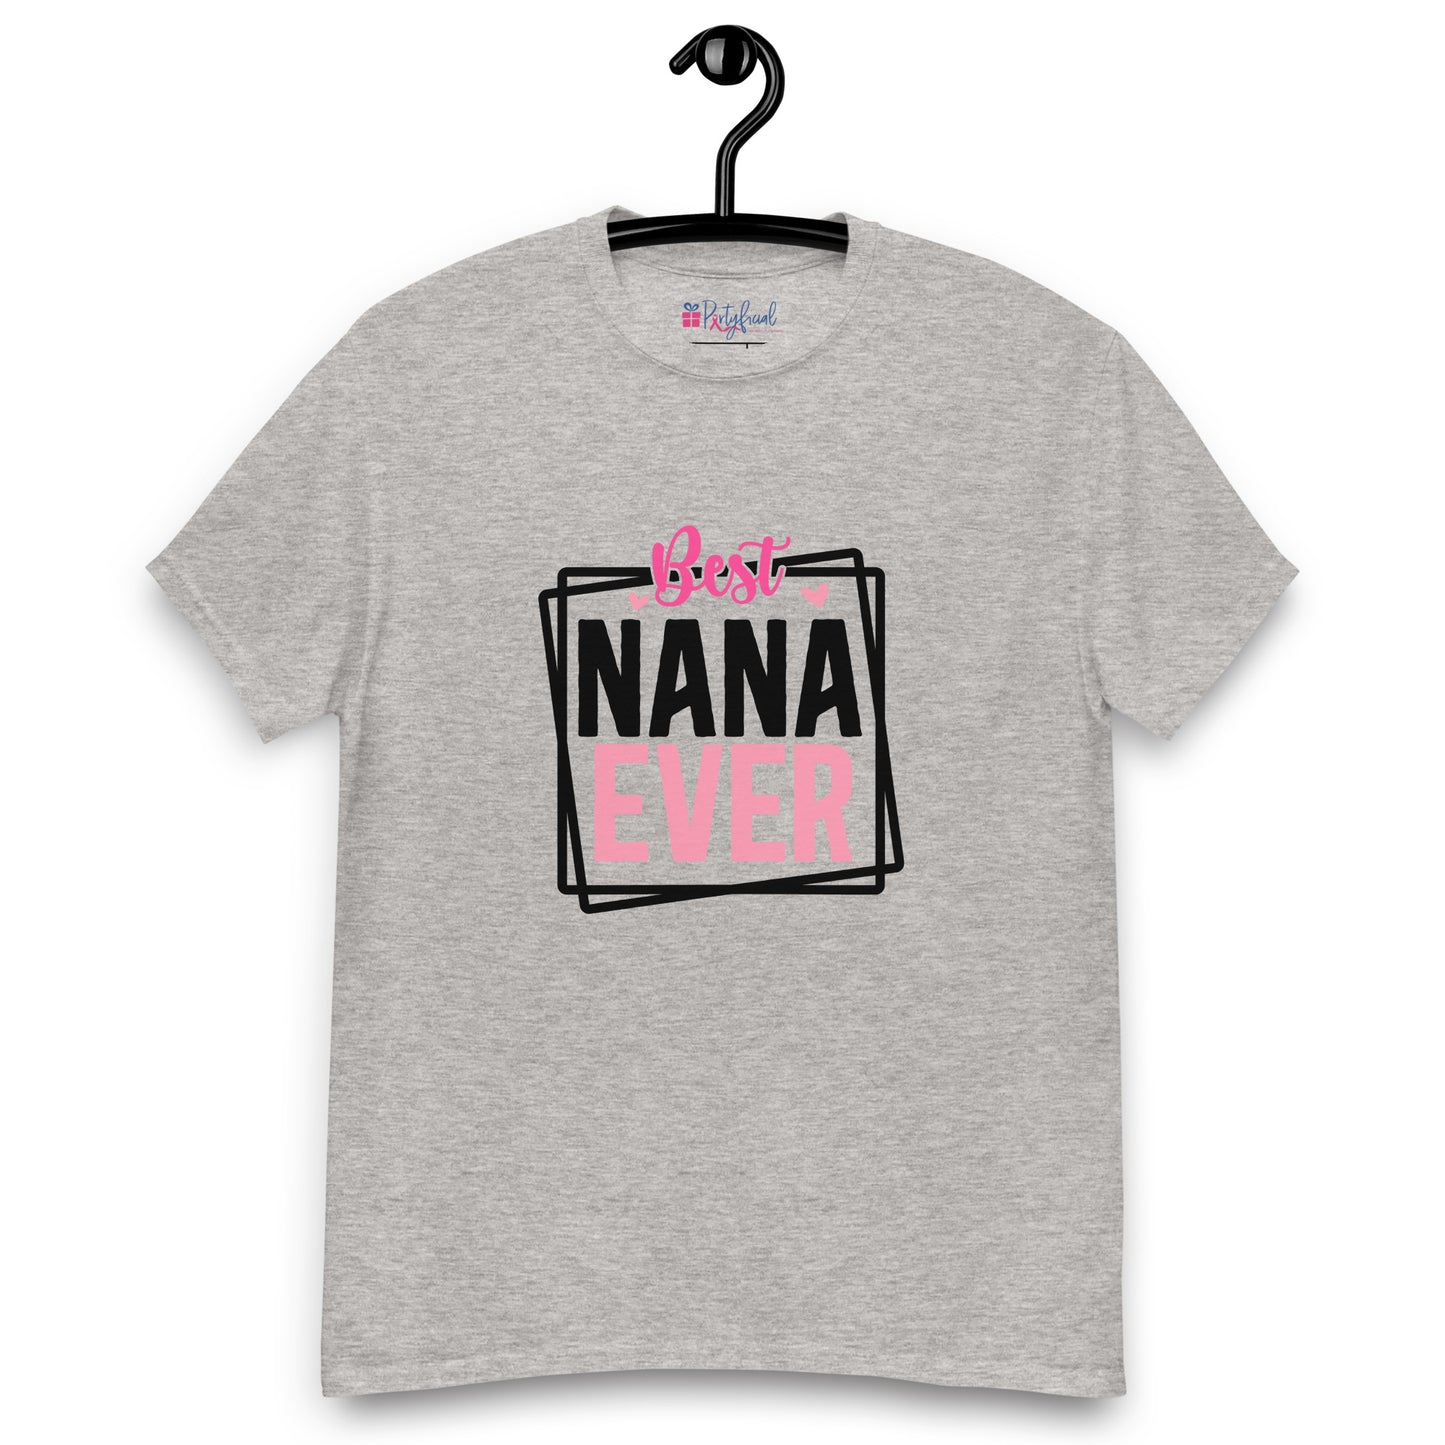 Best Nana Ever tee